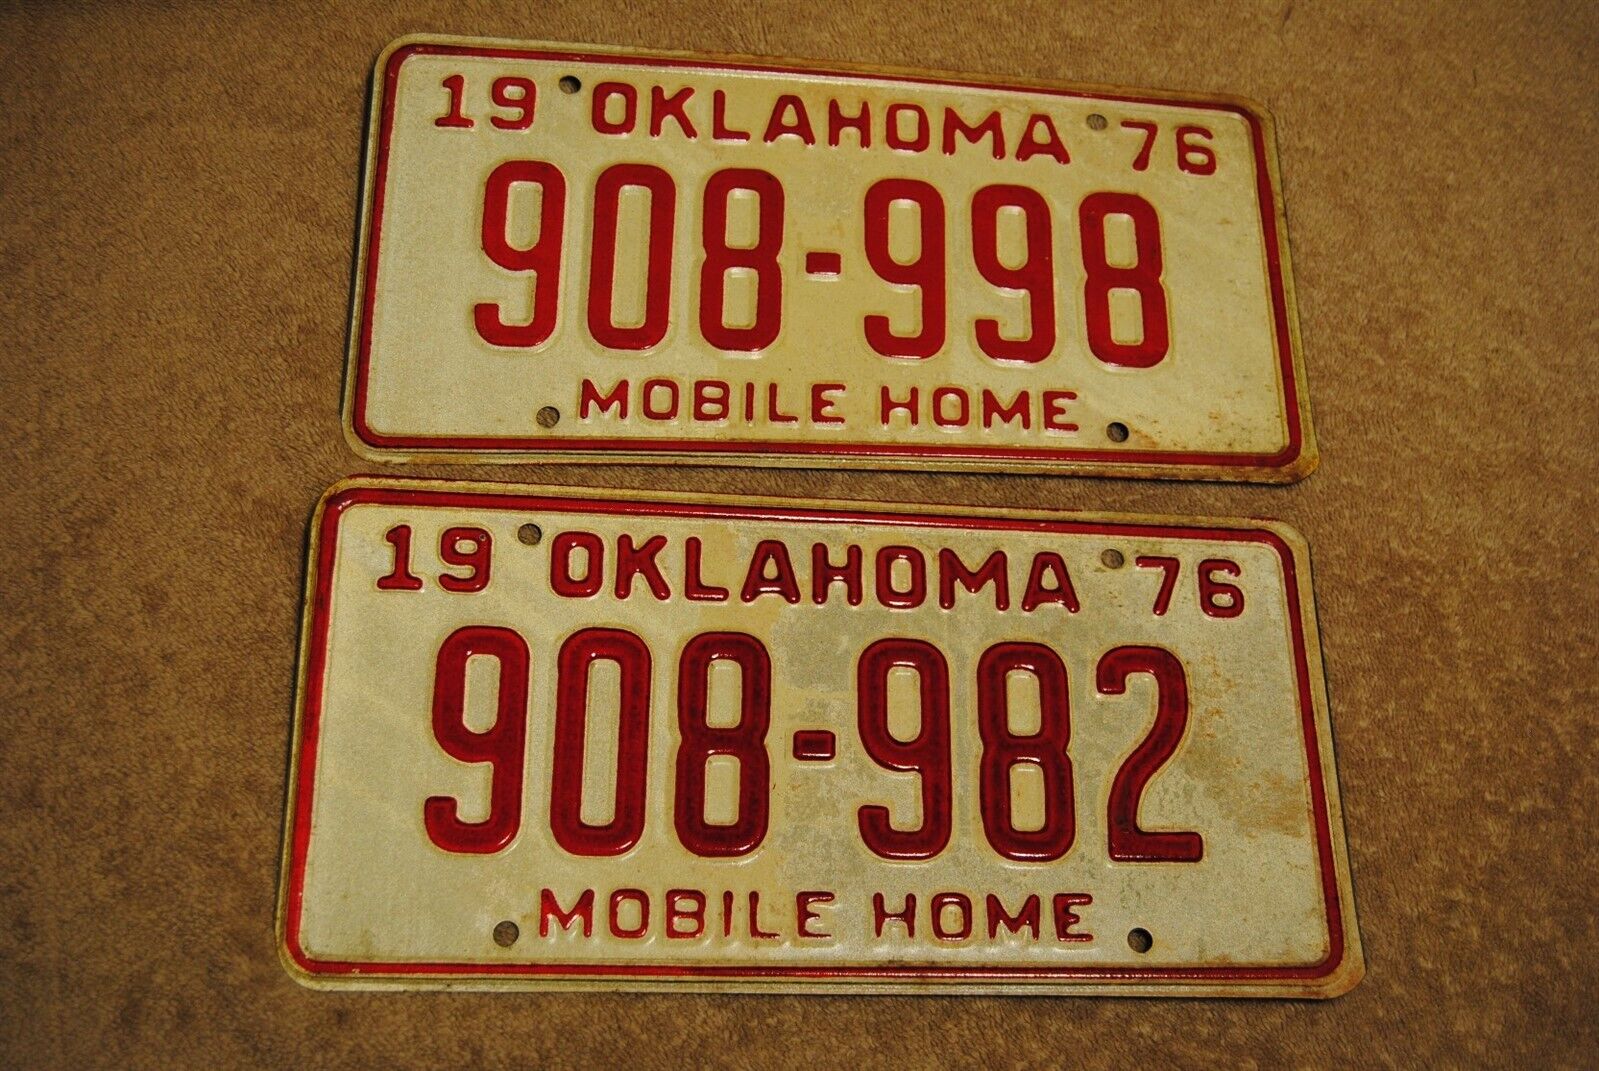 Two Vintage 1976 Oklahoma Mobile Home License Plates 908-998 & 908-982